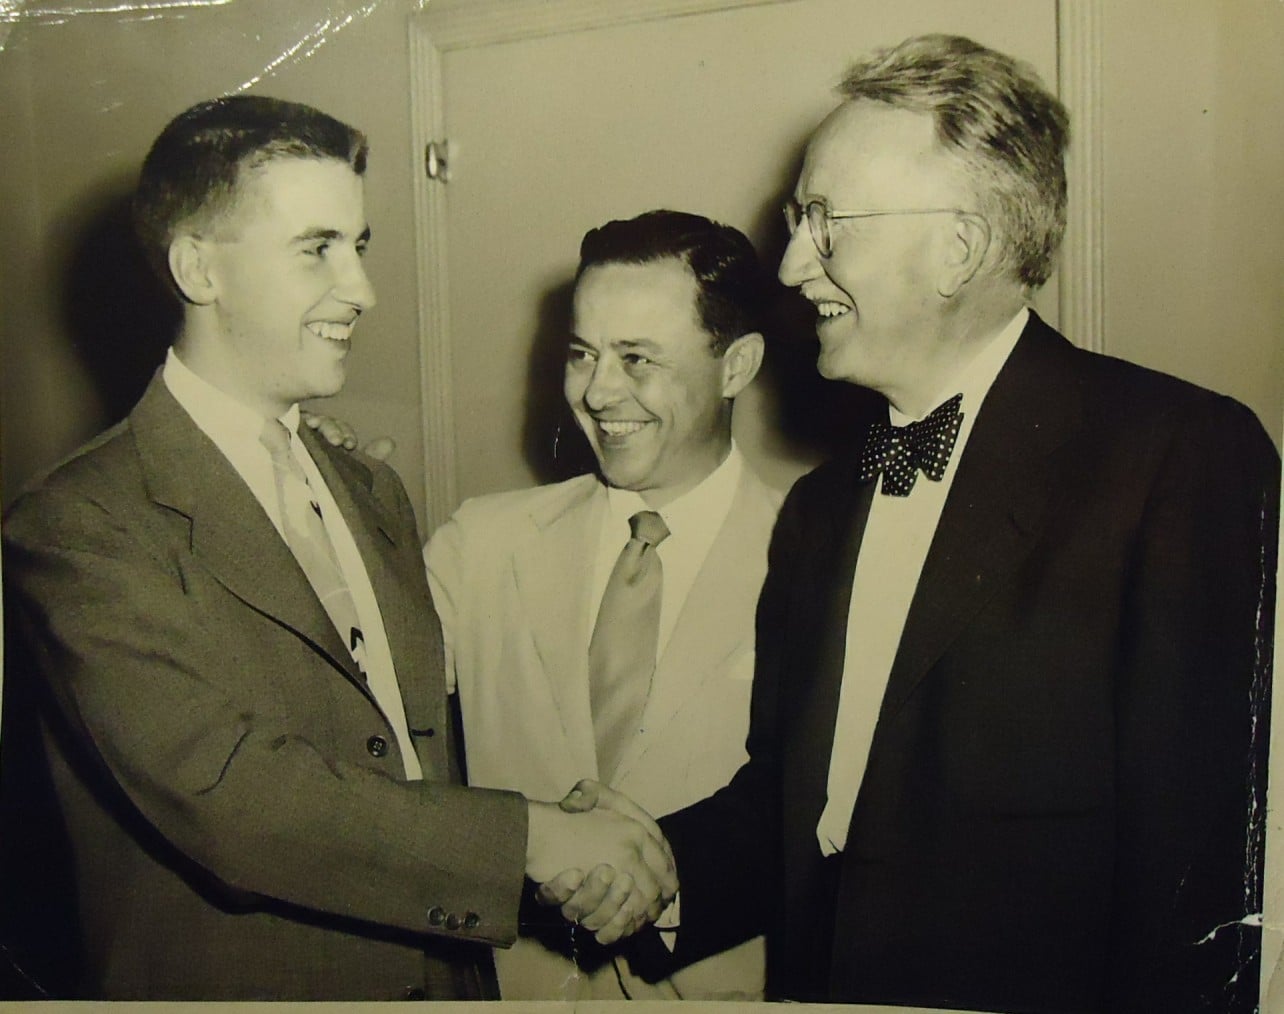 Vintage young man shaking hands with older businessman.